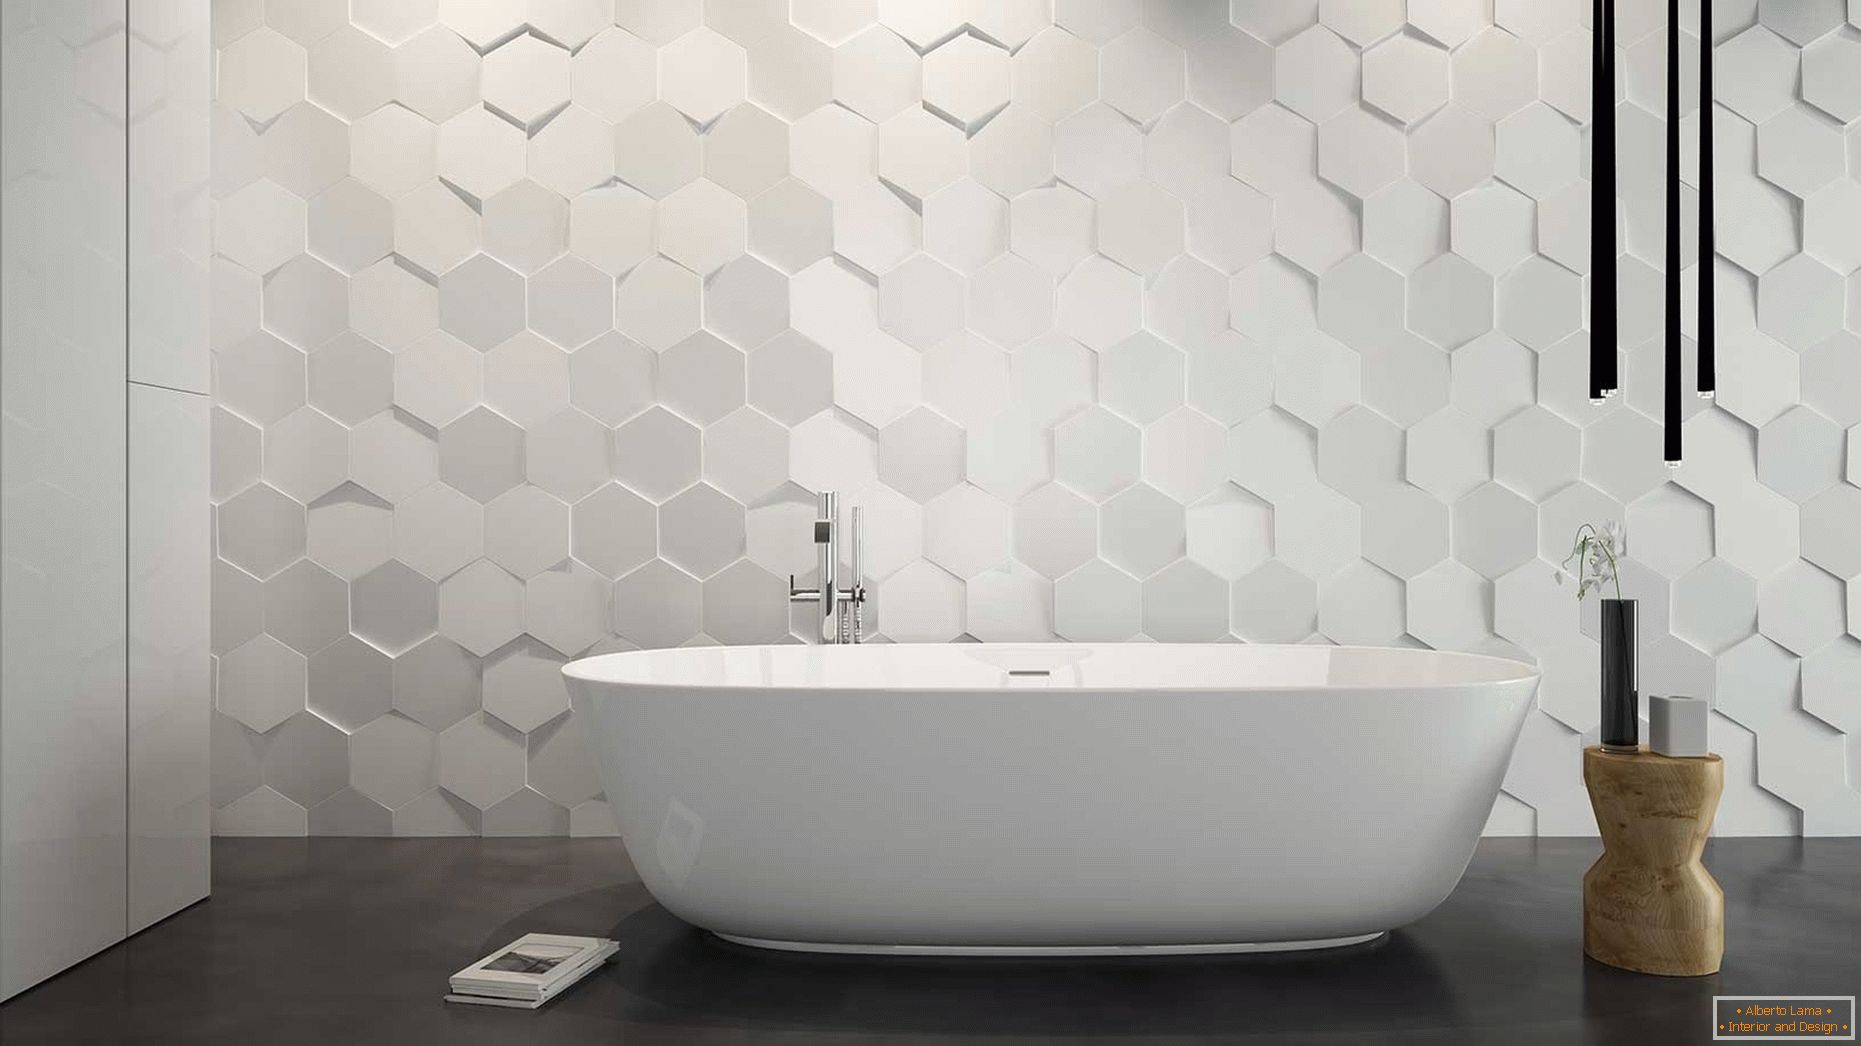 Ceramic tiles in the bathroom